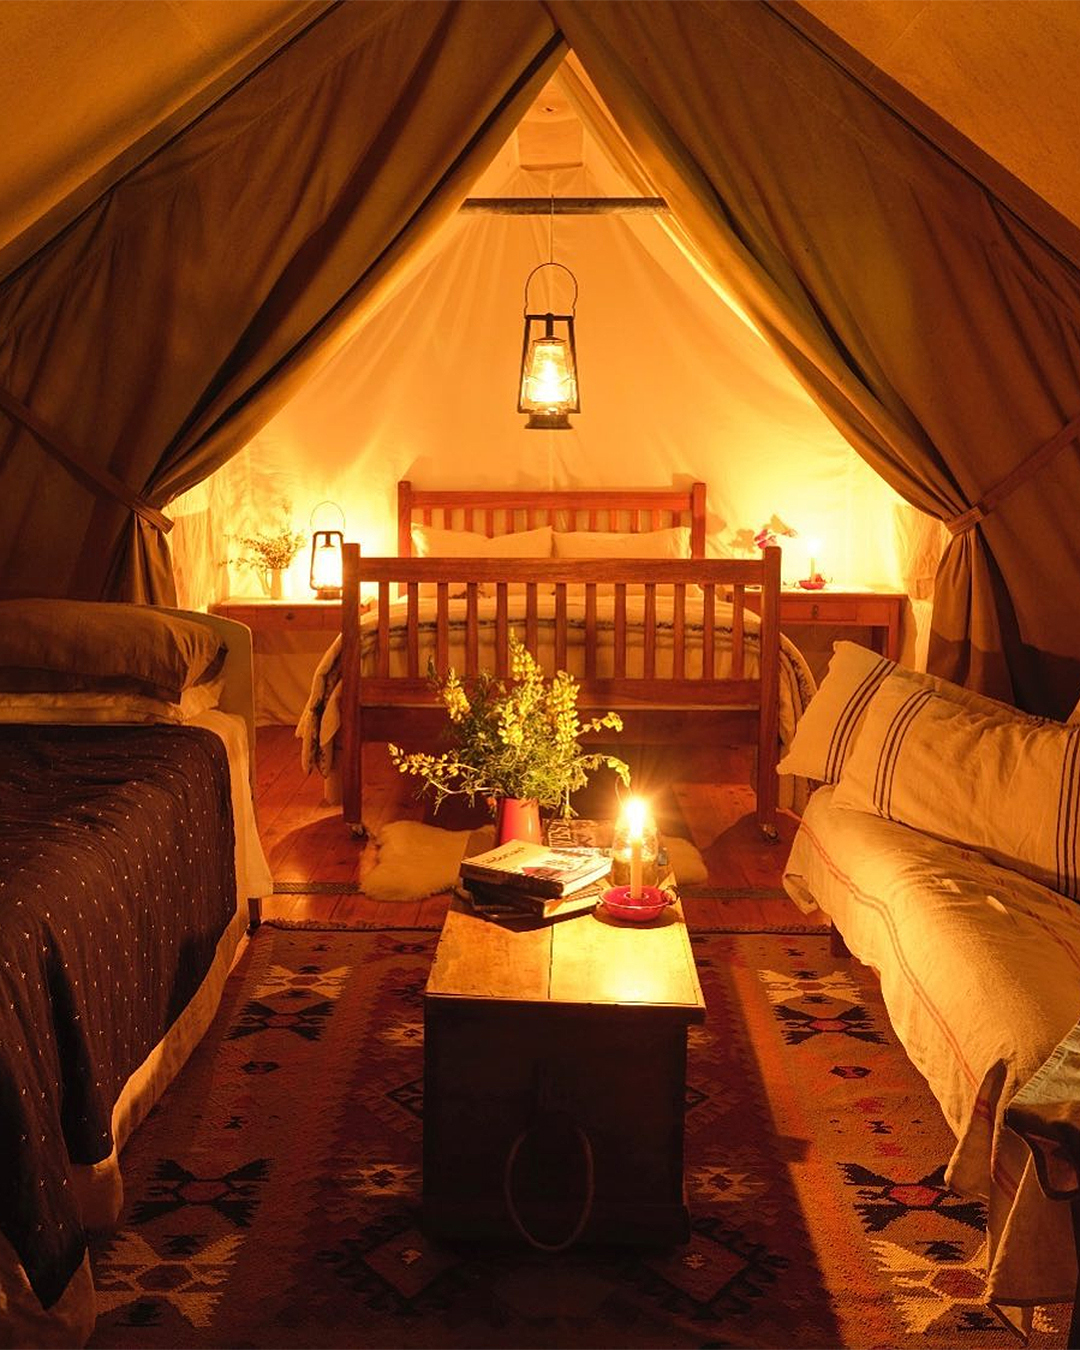 A cosy interior of the luxury tents at Wainamu.